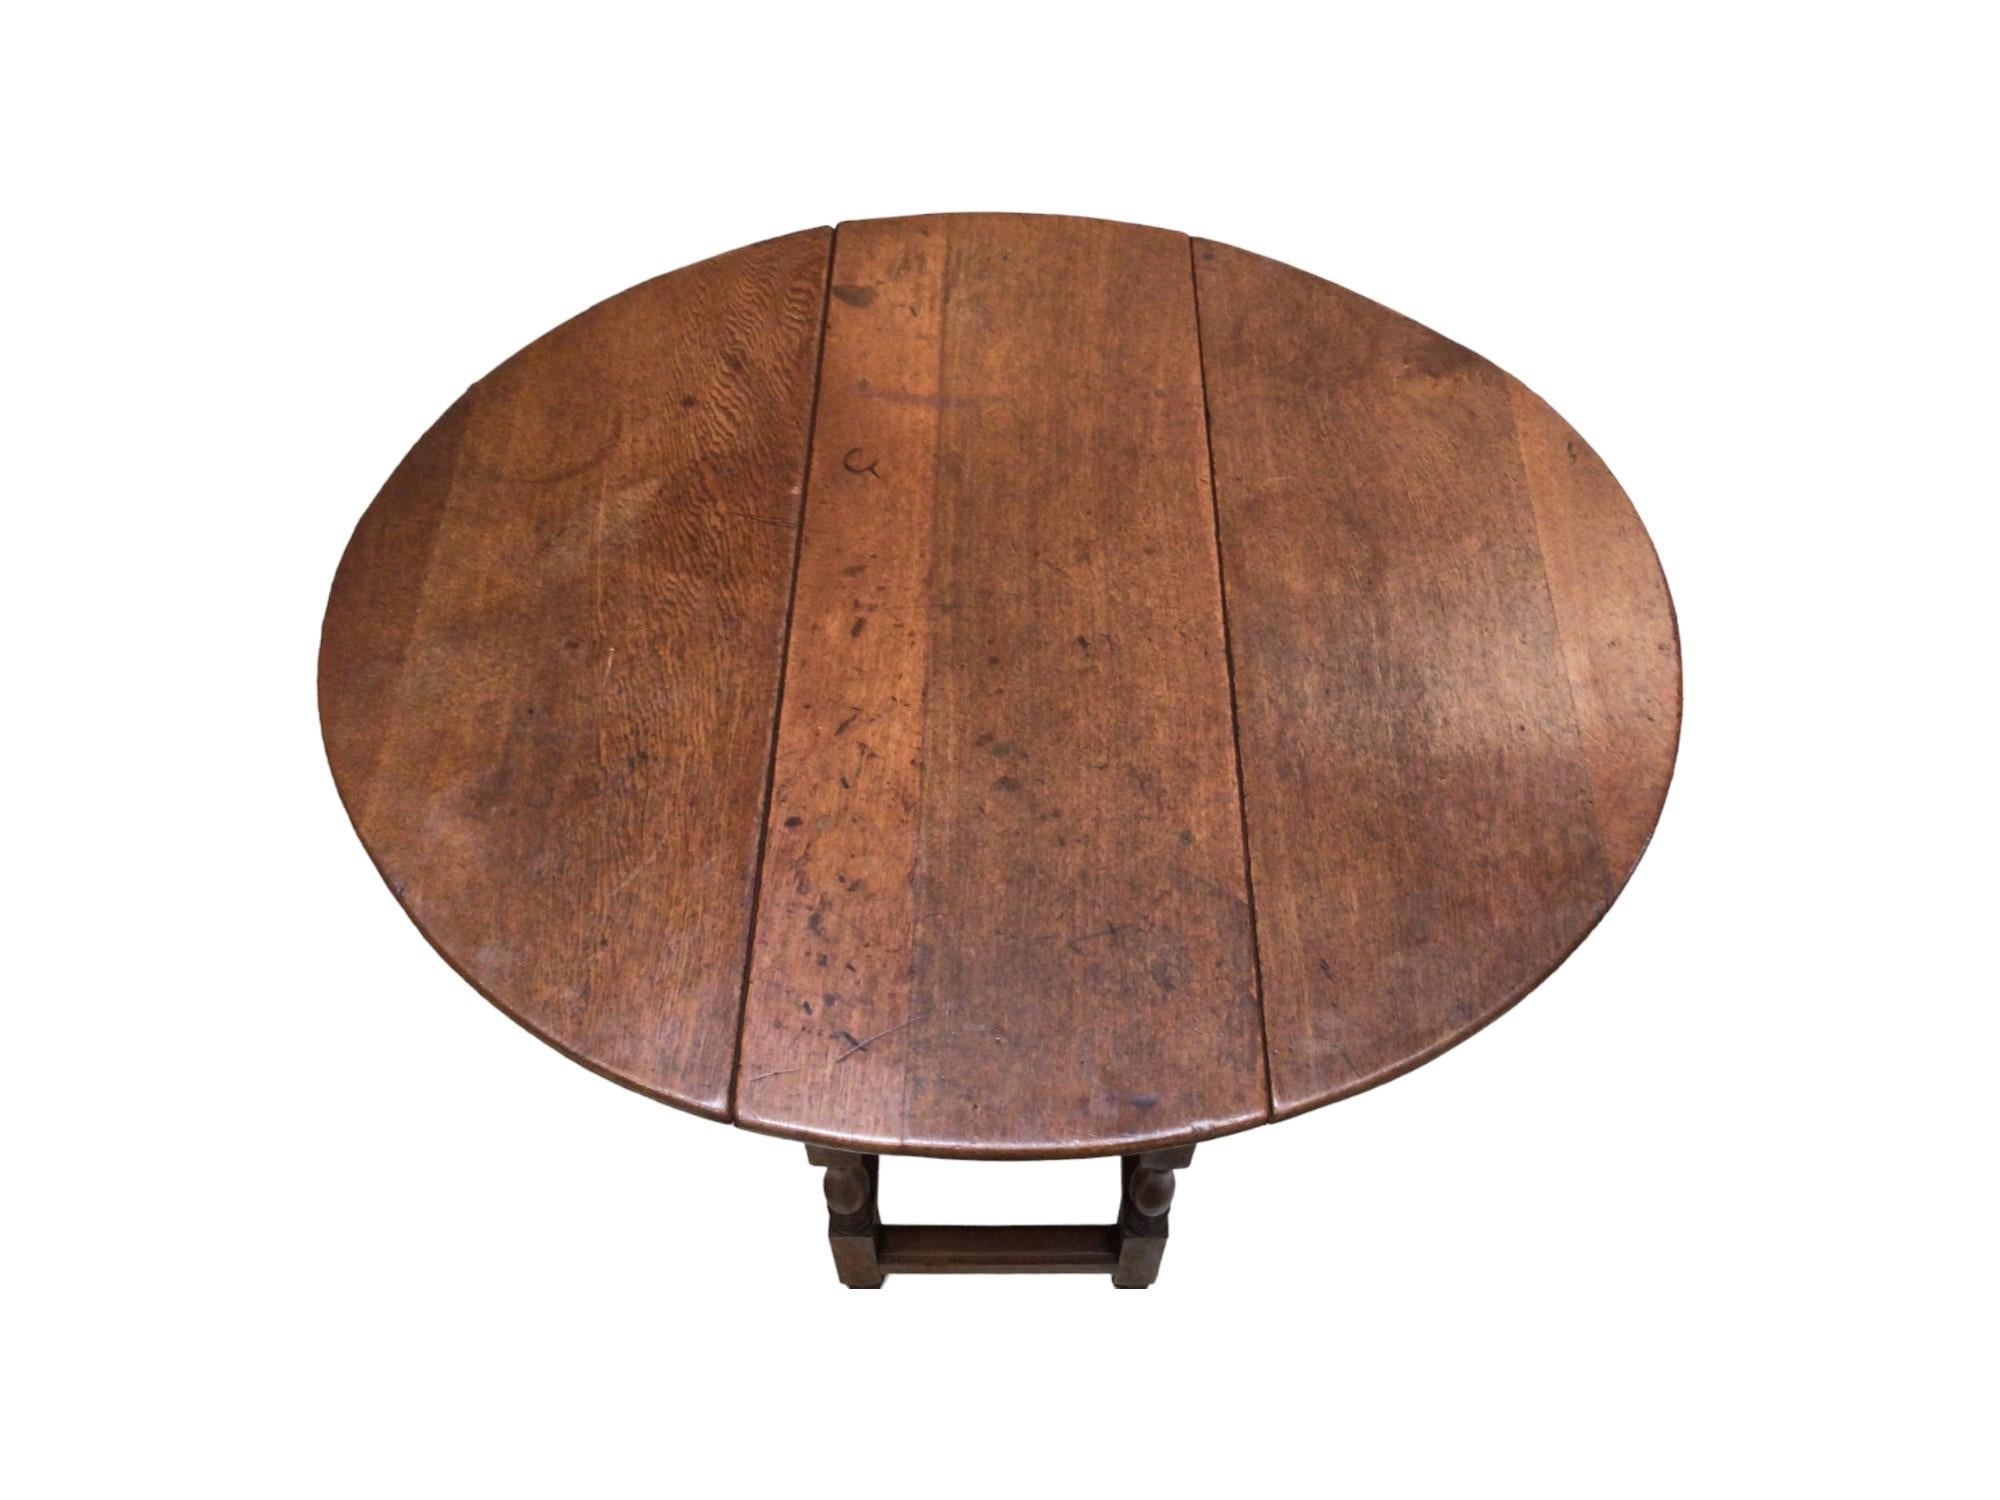 Georgian Oak Gateleg Table with Drawer
51”x45”x28.5